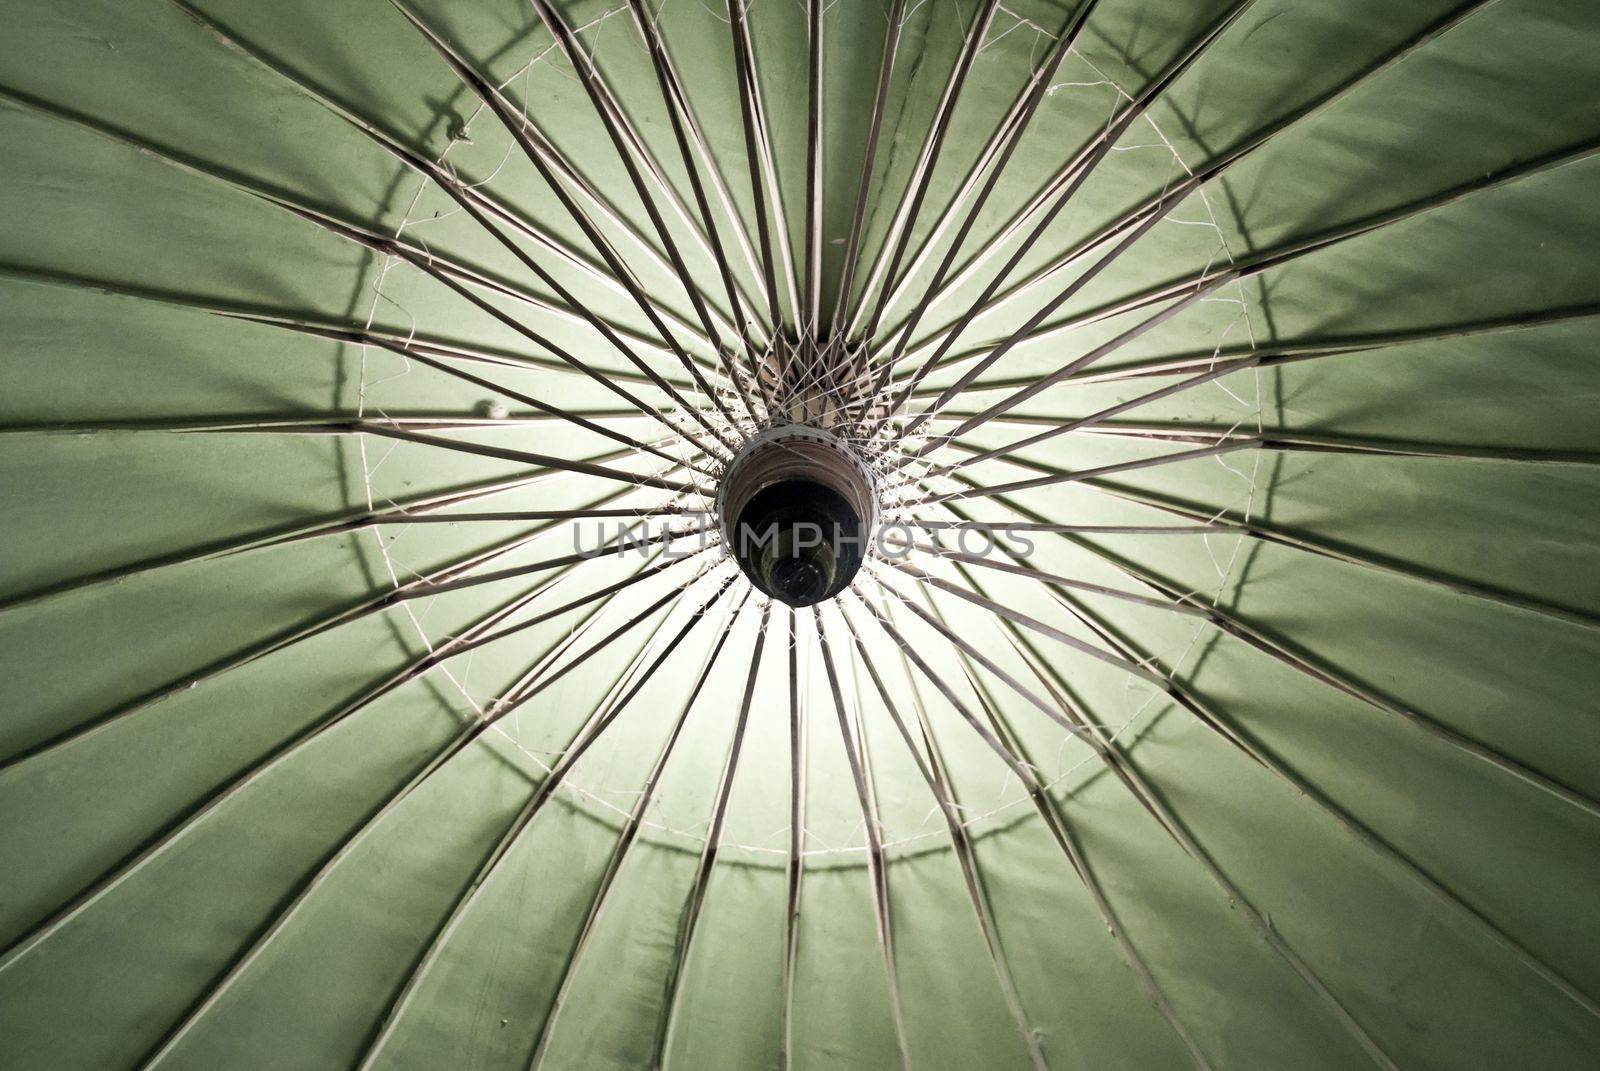 Under green umbrella with lighting downlight, vintage tone by rakoptonLPN